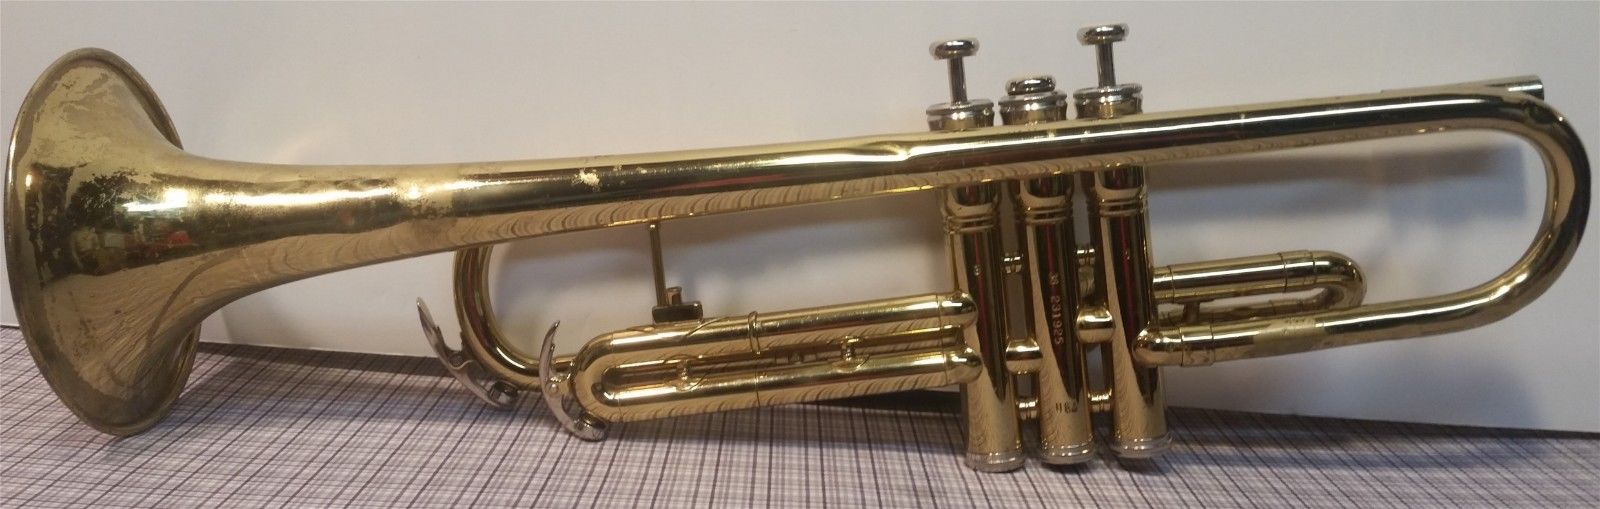 King Tempo 600 Trumpet, USA Parts or Refurbish Musical Instrument Brass